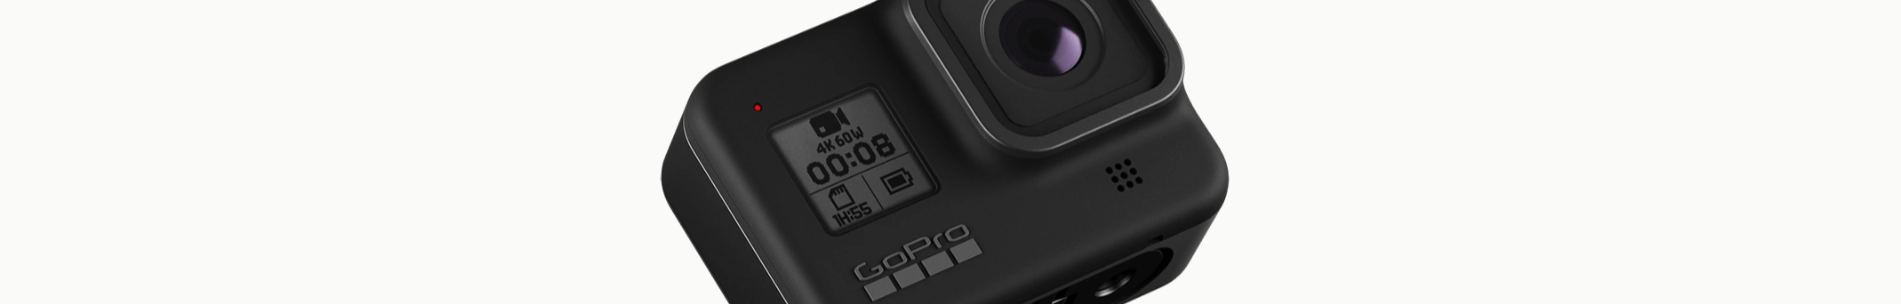 GoPro HERO6 black